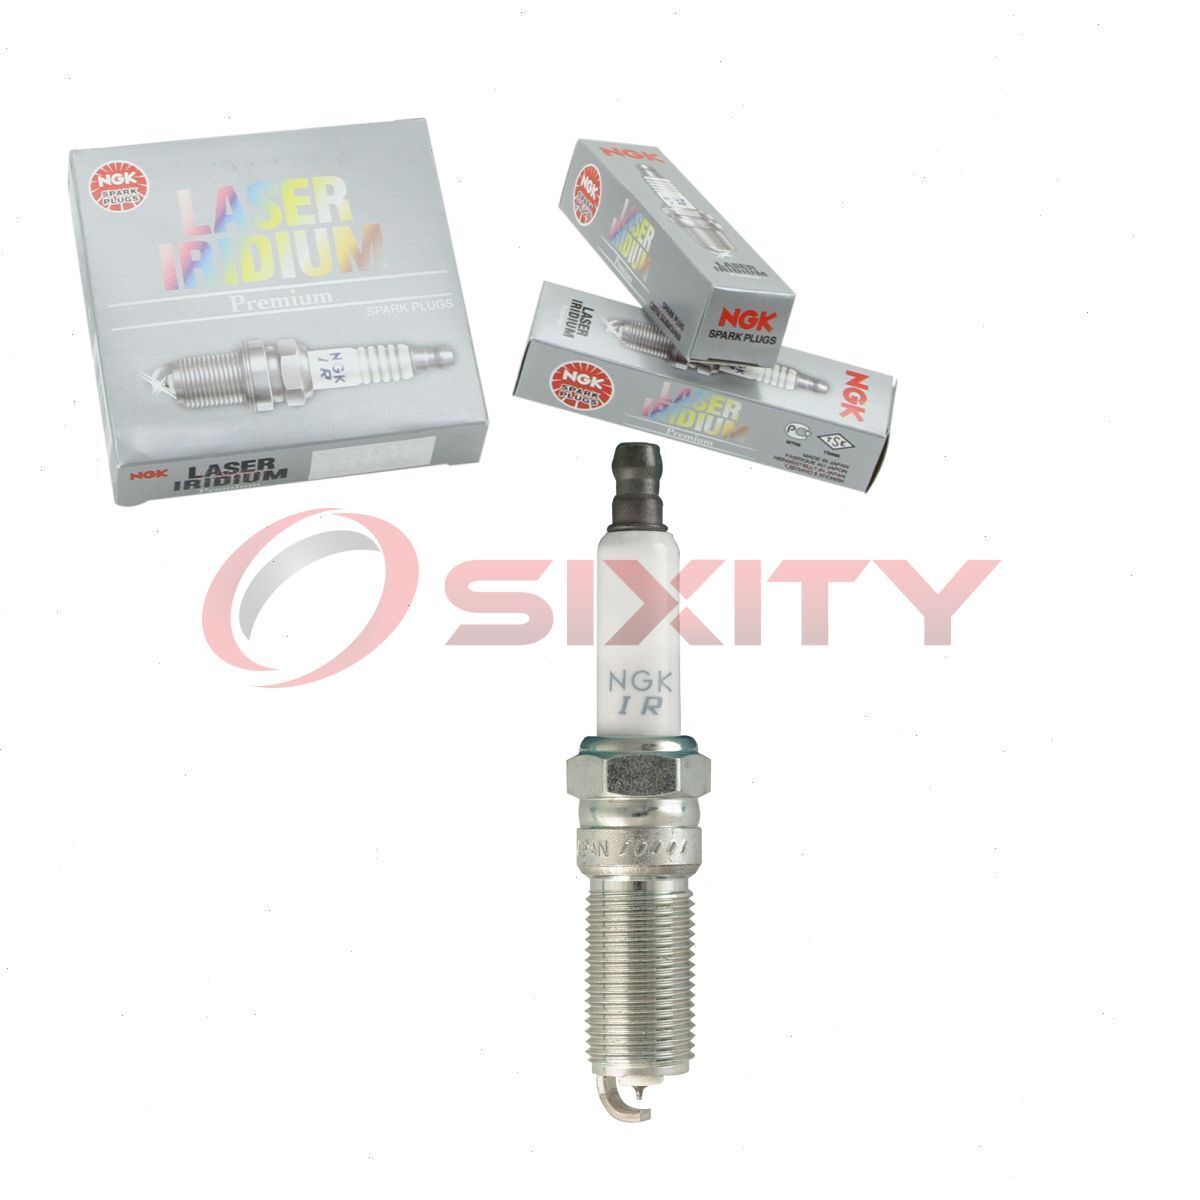 NGK 91725 LTR6BI-13 Laser Iridium Spark Plug for SP527 LFJR-18-110 -9U zc